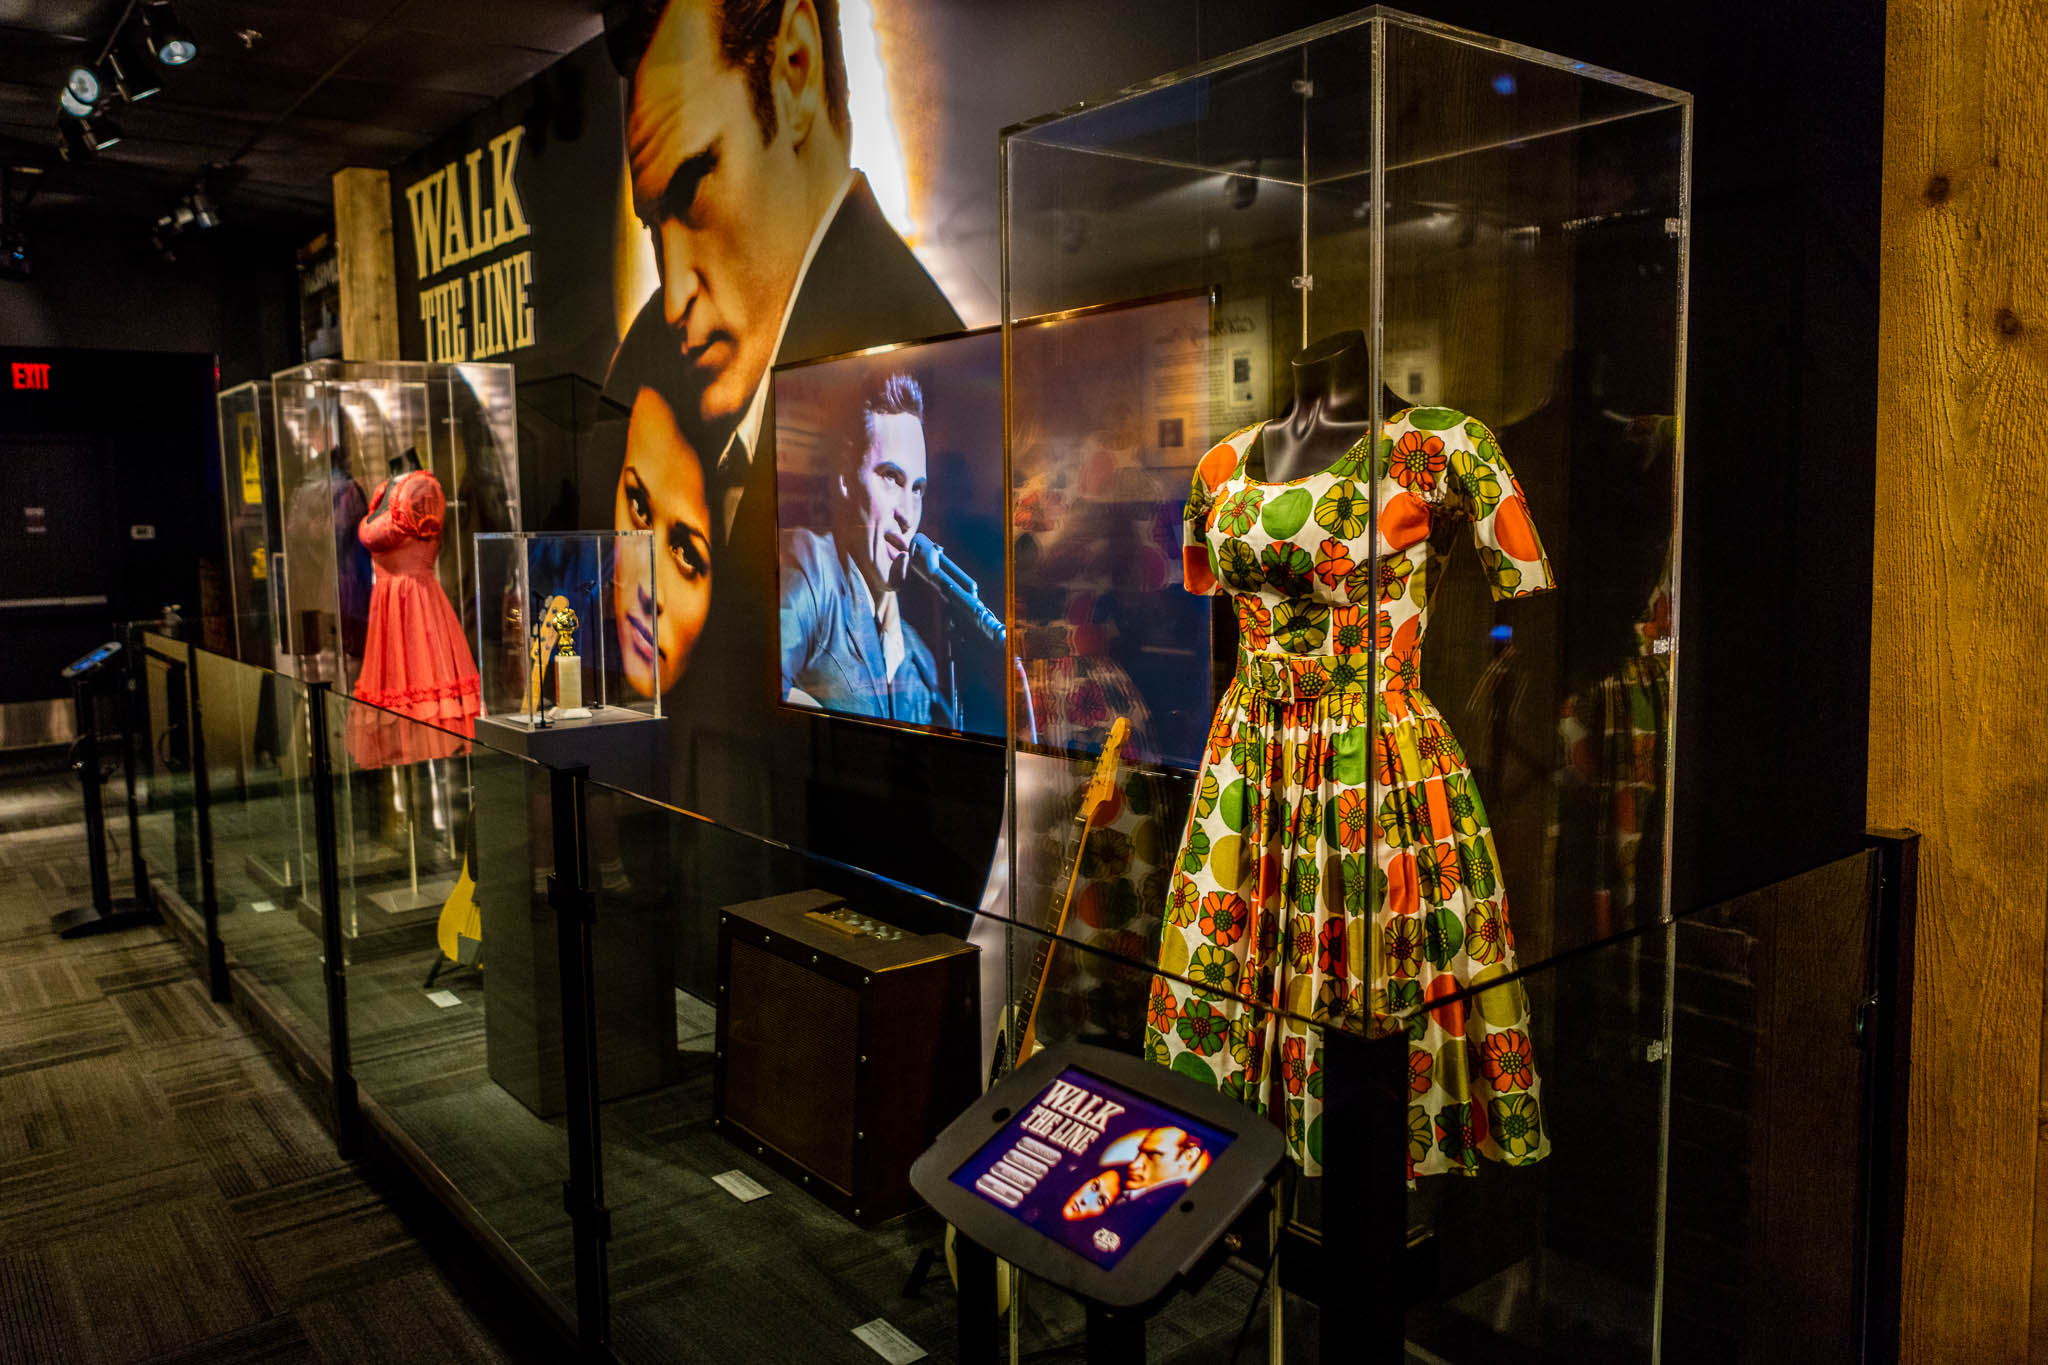 The Johnny Cash Museum in Nashville